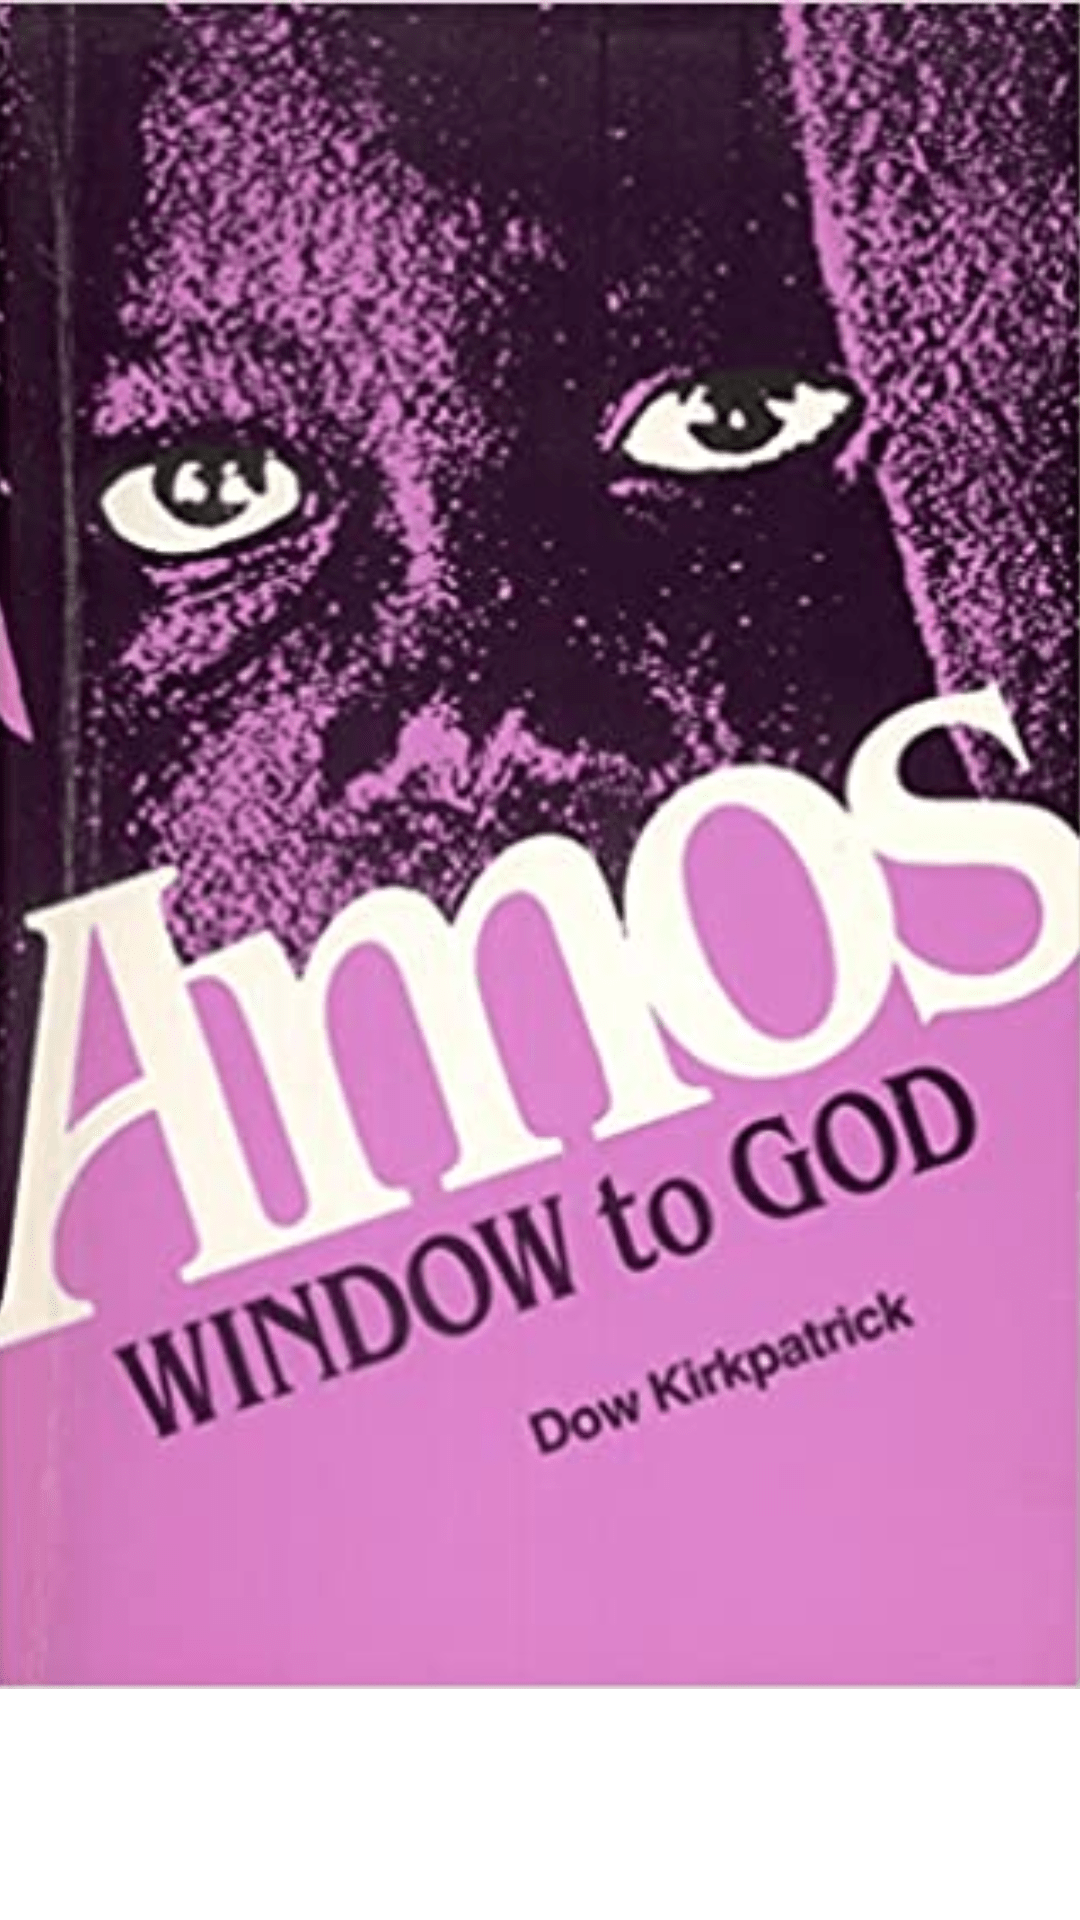 Amos: Window to God